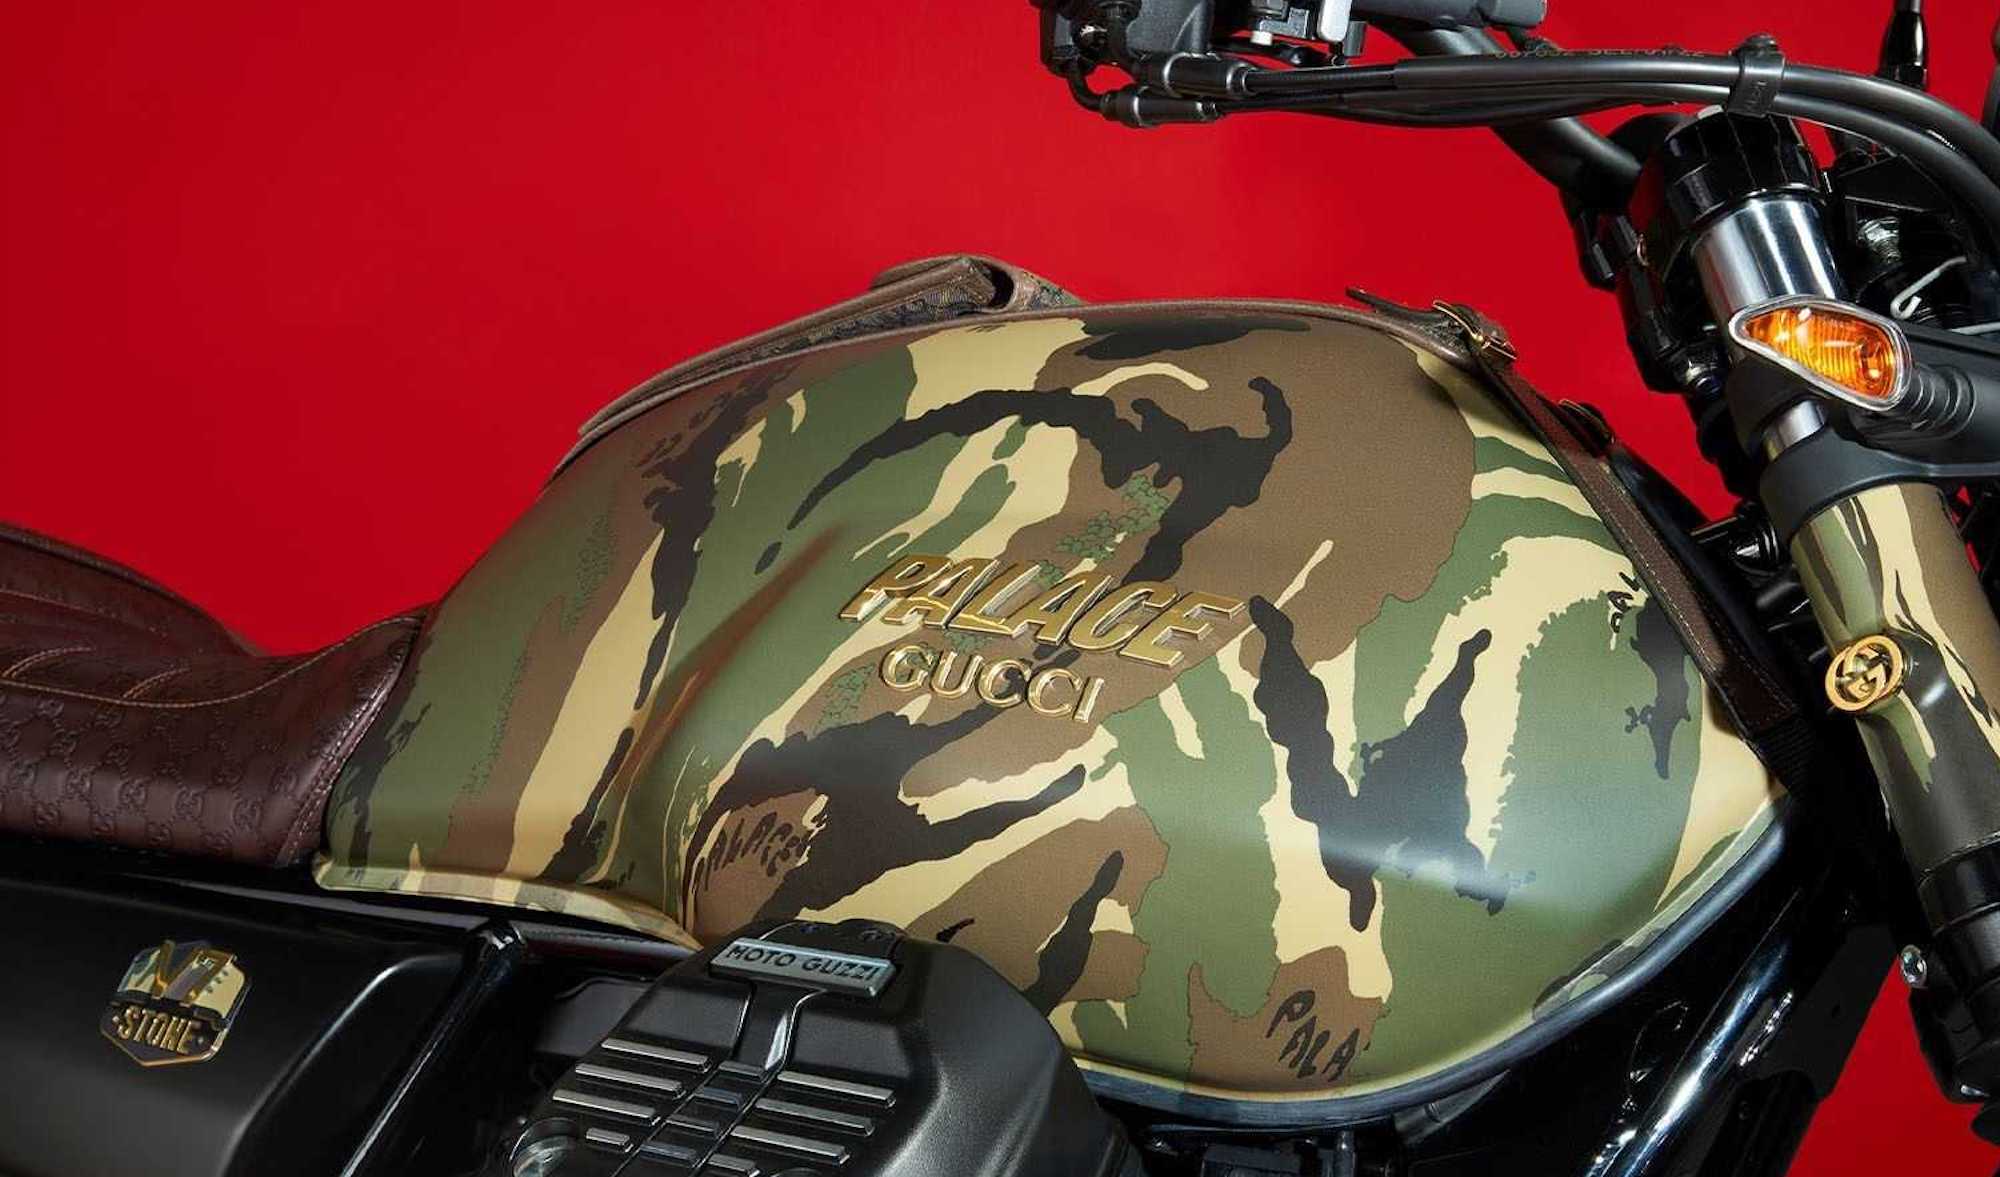 Gucci, Moto Guzzi & Palace: Fashion Meets Military with Limited V7 -  webBikeWorld